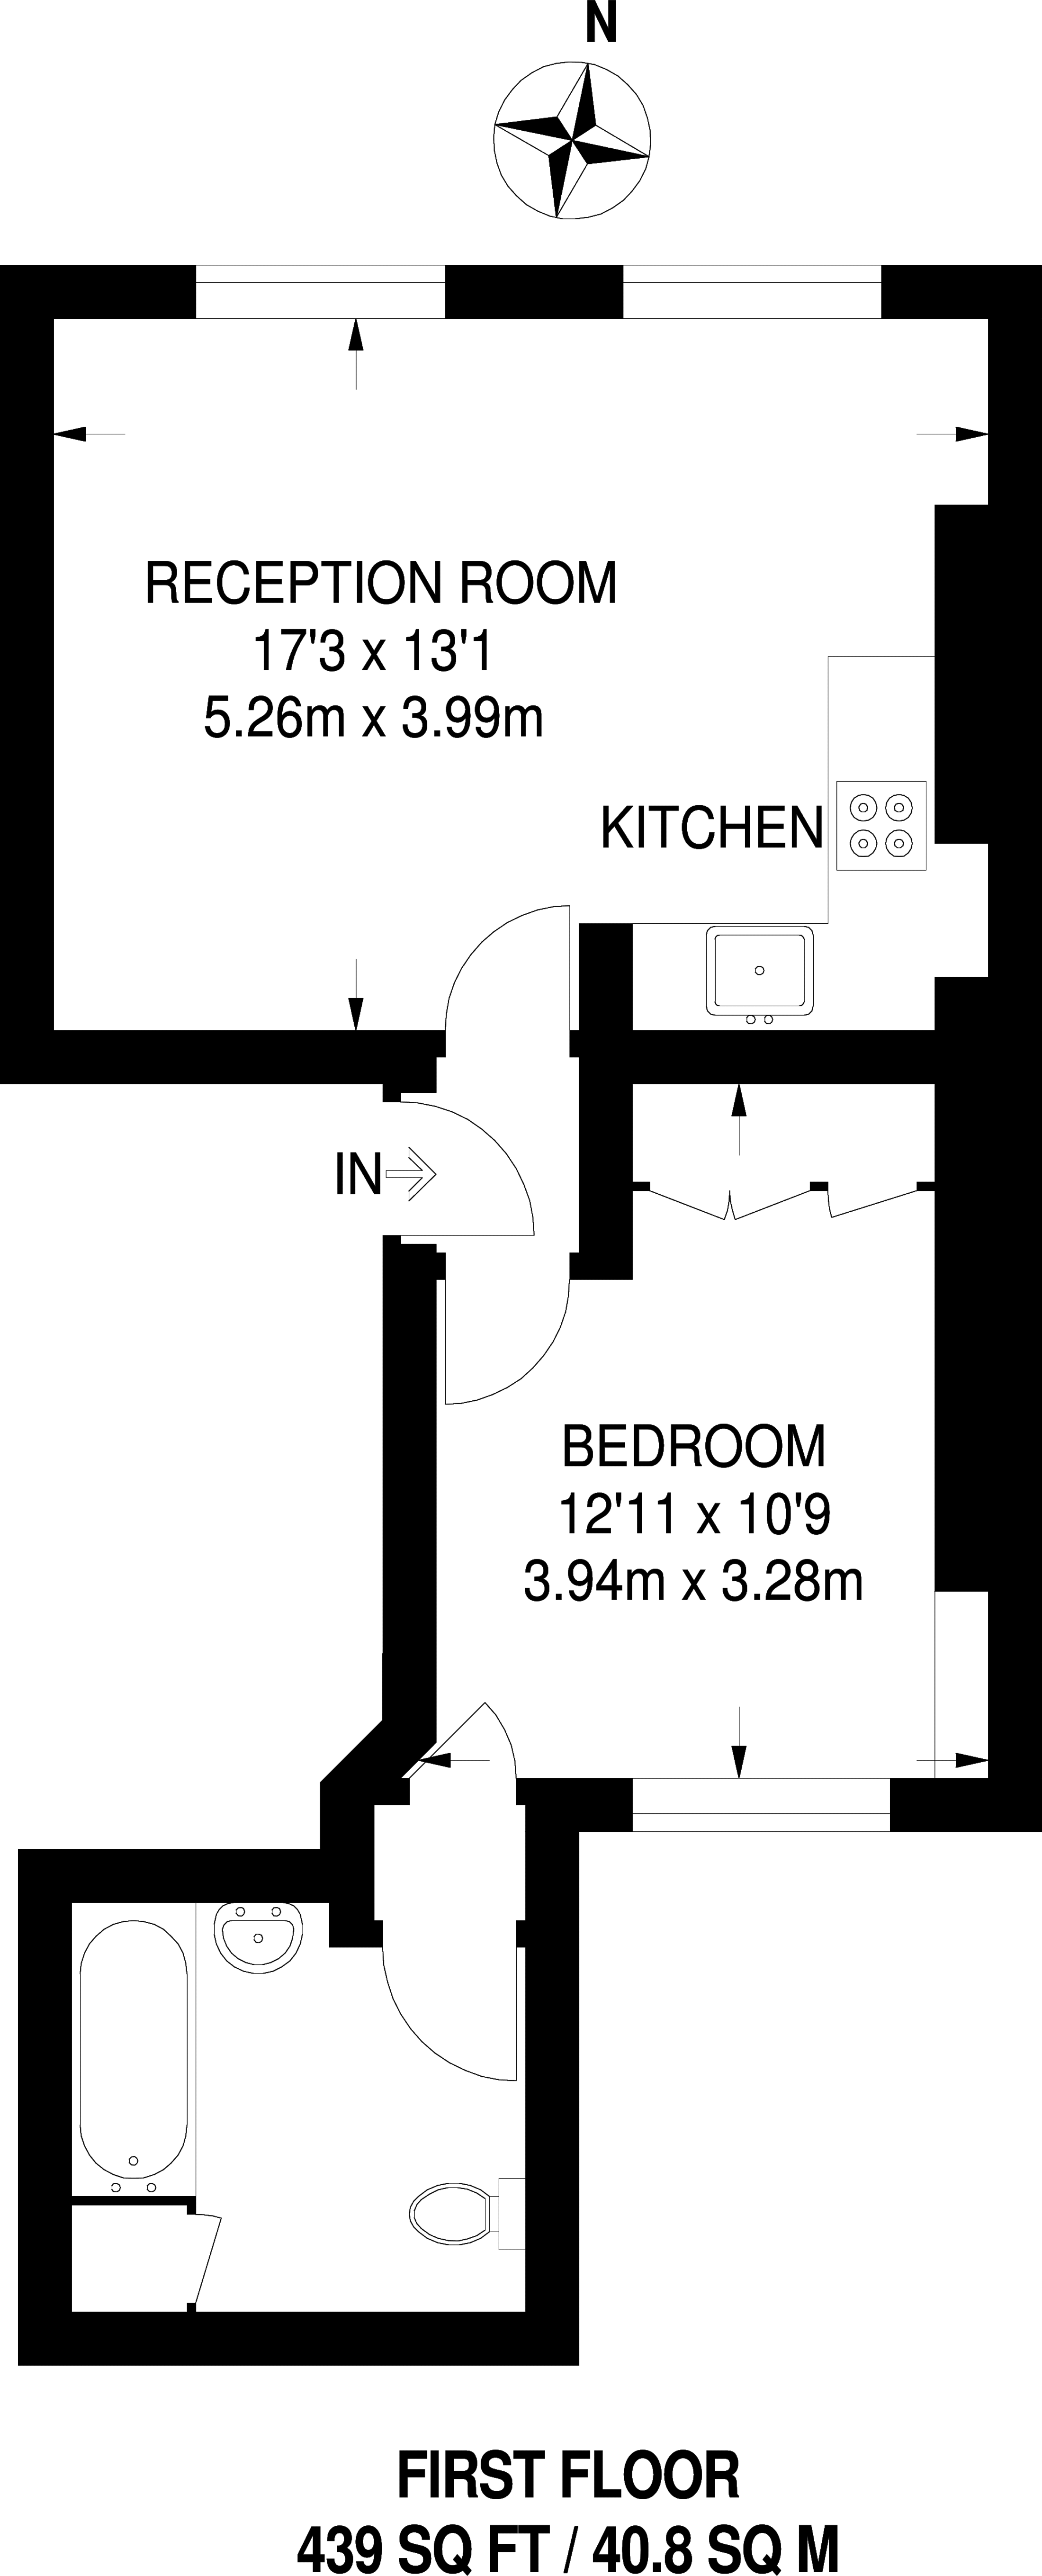 1 Bedrooms Flat to rent in Chesterton Road, Ladbroke Grove, London W10